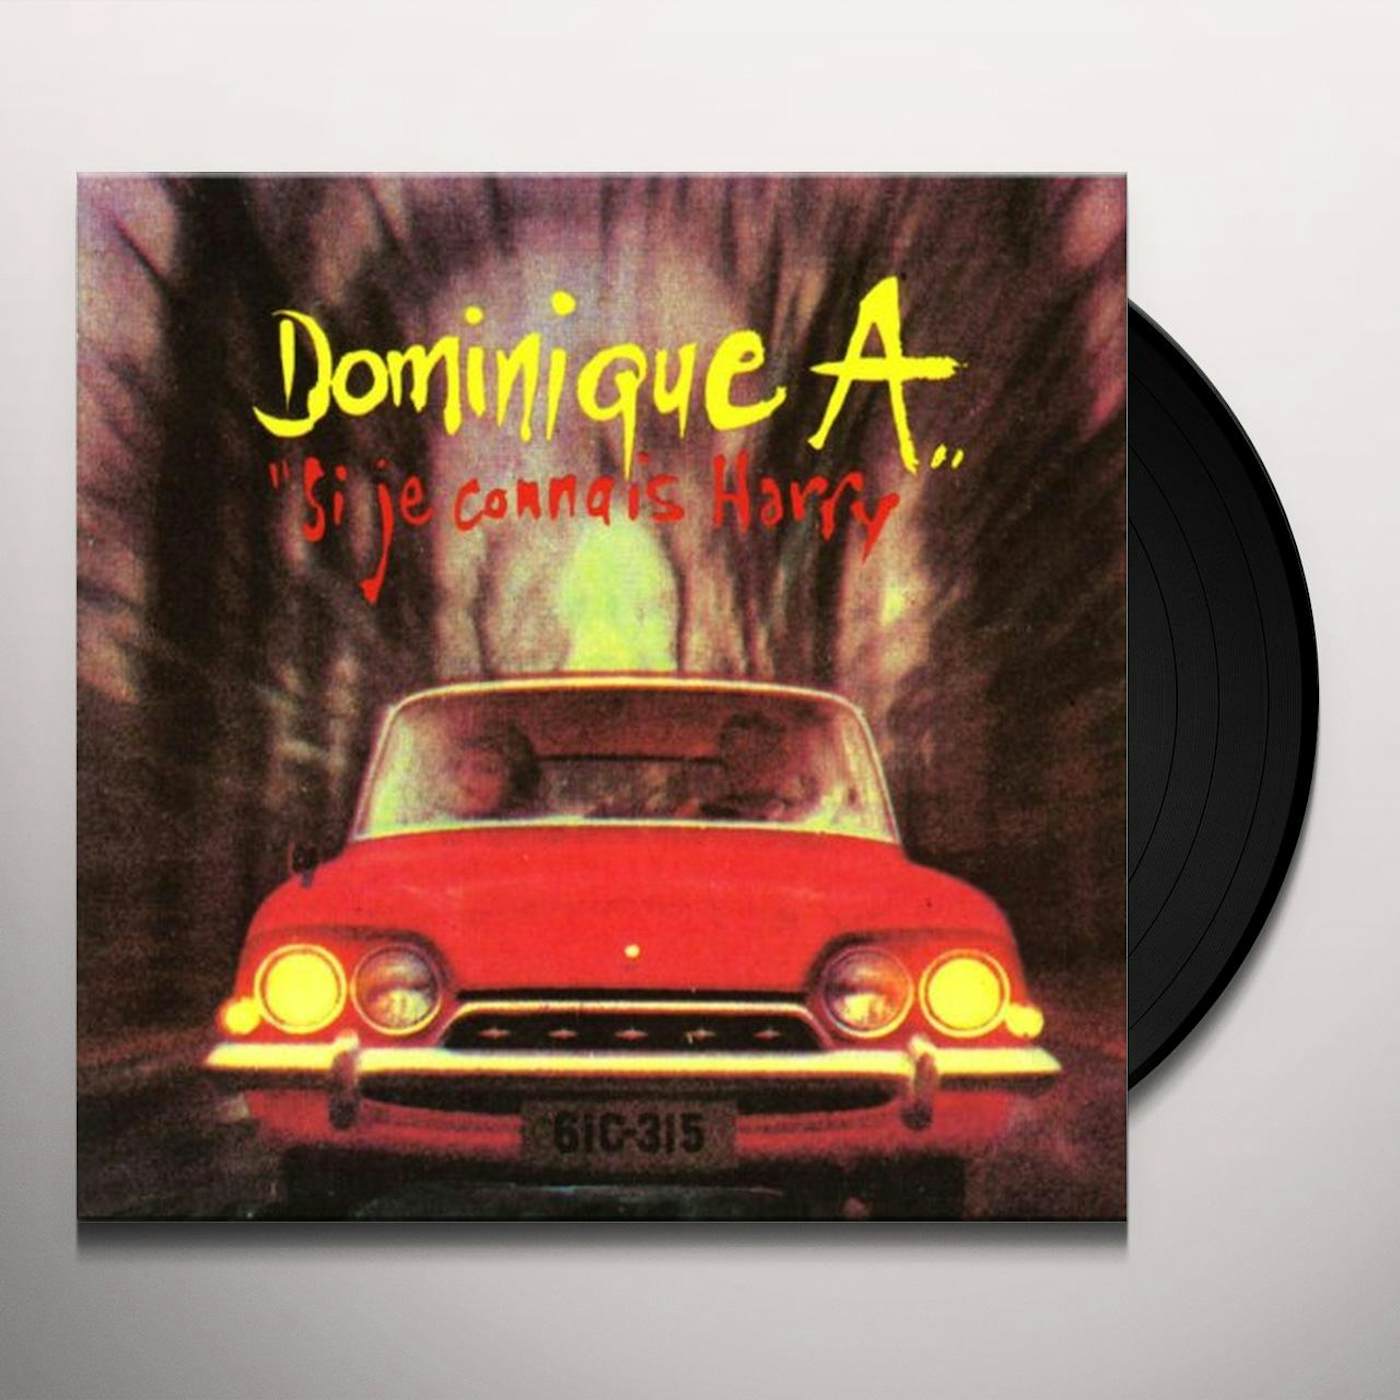 Dominique A Si Je Connais Harry Vinyl Record